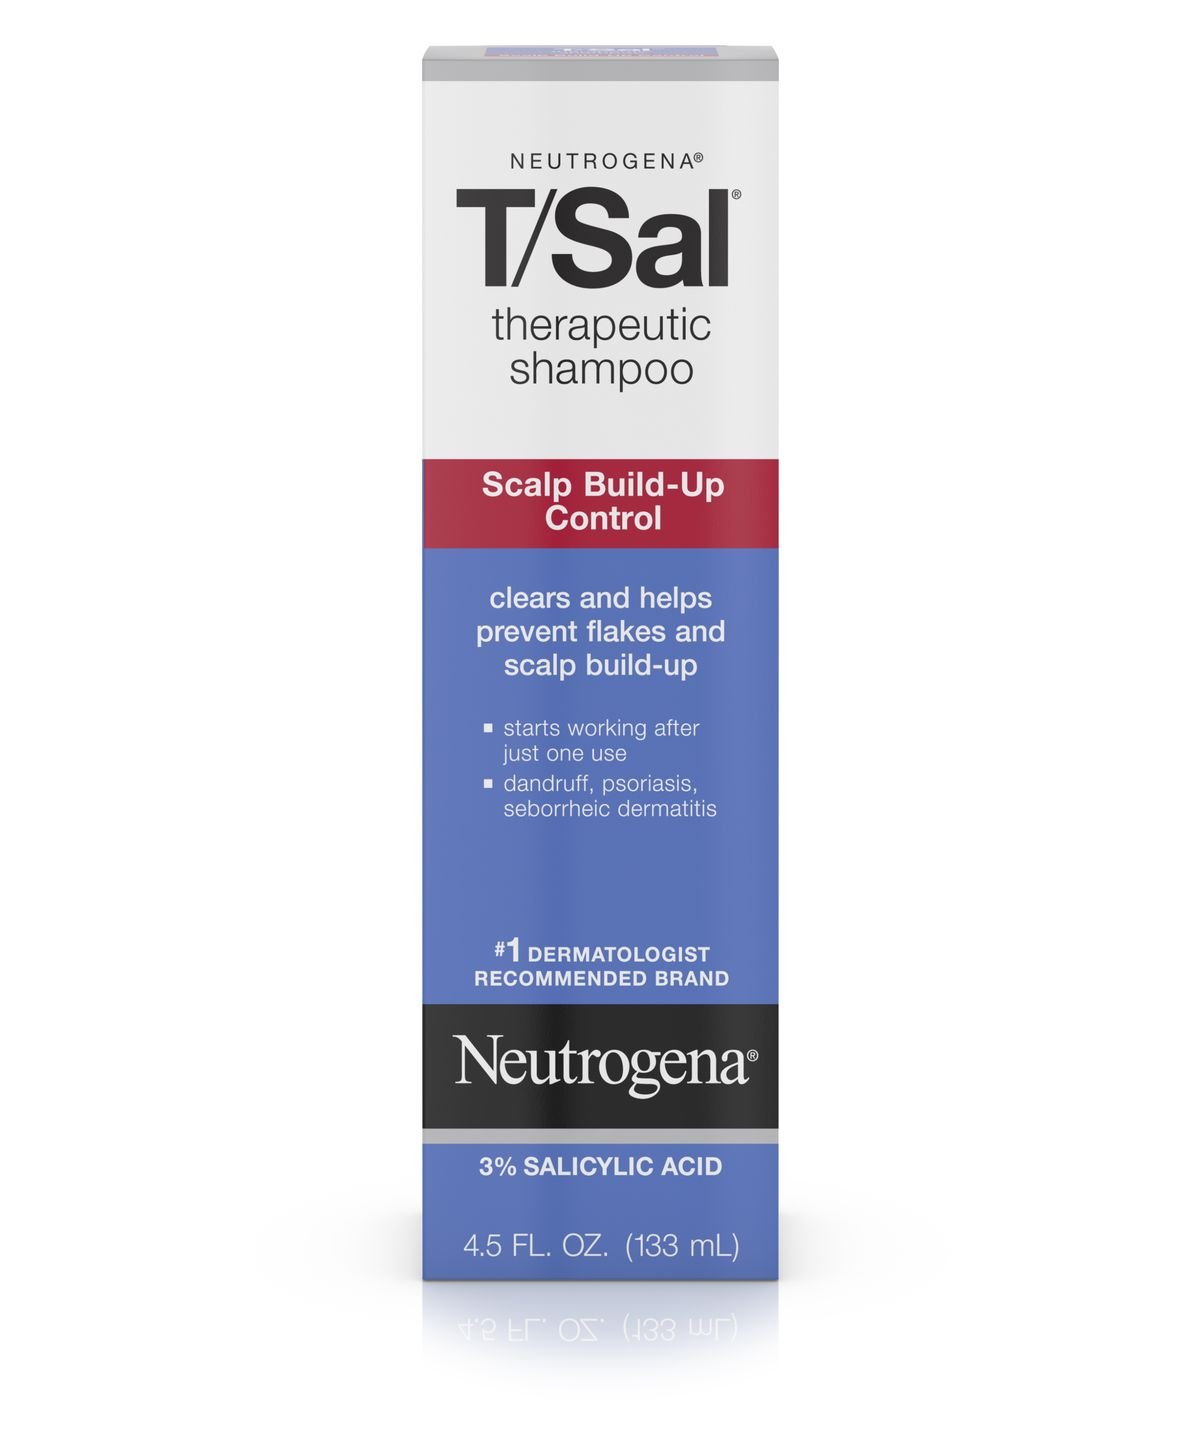 Neutrogena T/Sal Therapeutic Shampoo, 3% Salicylic Acid, 4.5 fl. oz - image 1 of 3